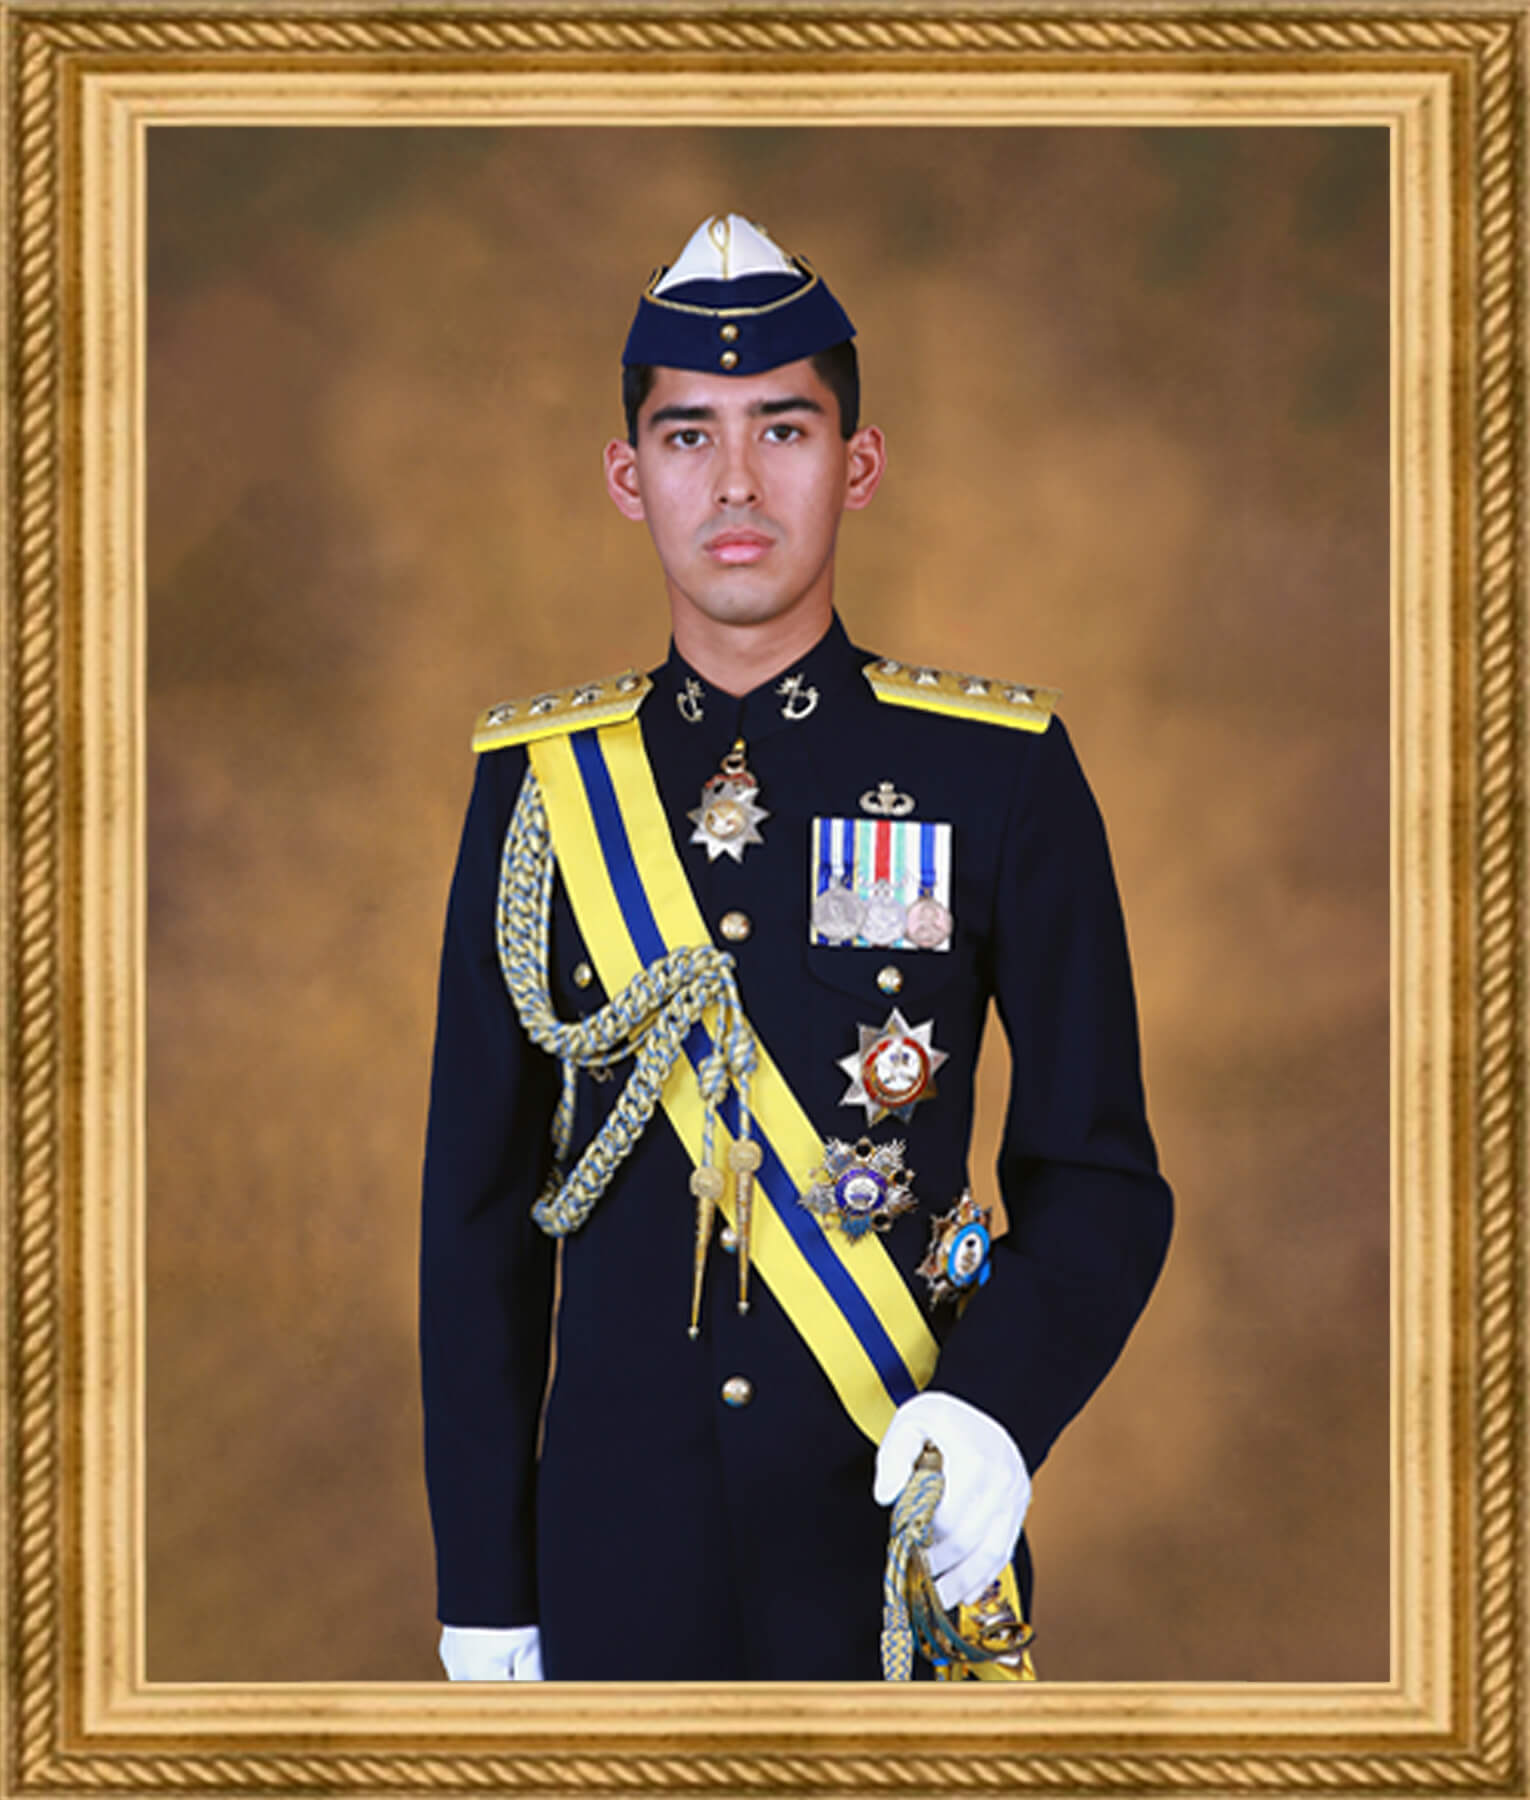 Yang Amat Mulia (His Highness) Tunku Abdul Rahman Hassanal Jeffri Ibni Sultan Ibrahim Al-Haj, Tunku Panglima Johor